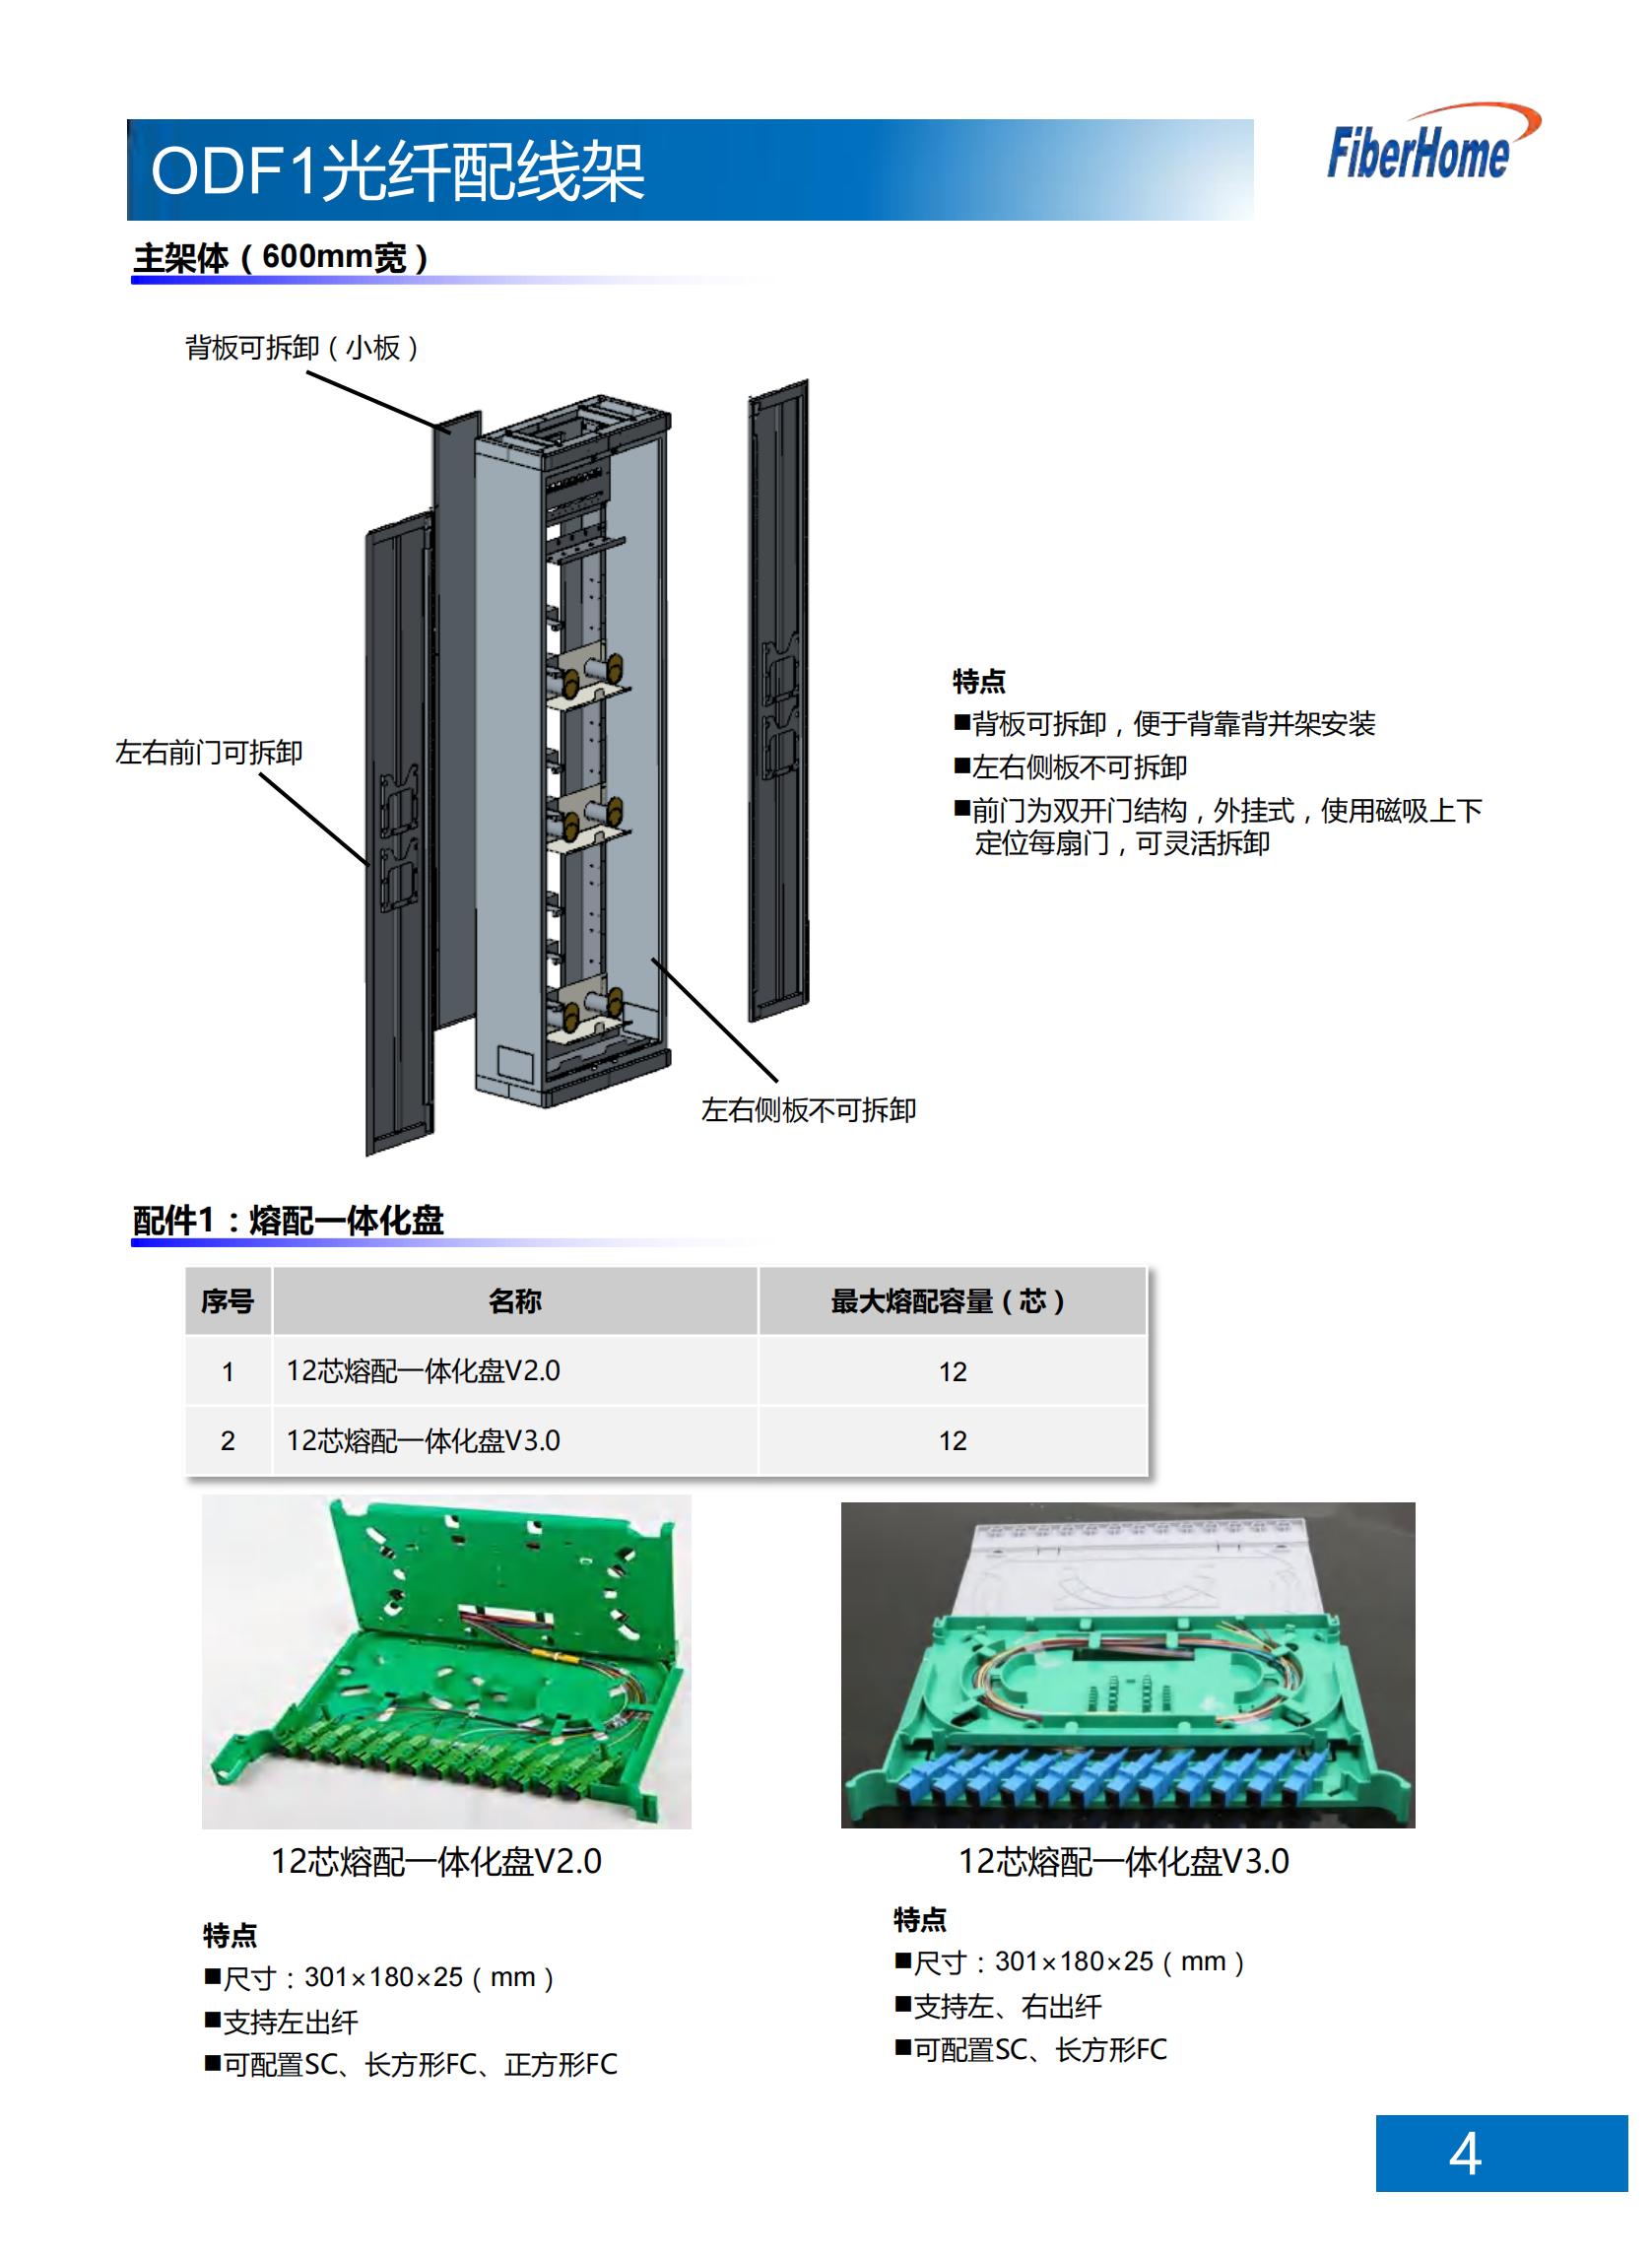 ODF101-576-A3-FC ODF光纤配线架 （576芯落地式 无子框型 全部含12芯FC熔配一体化单元）